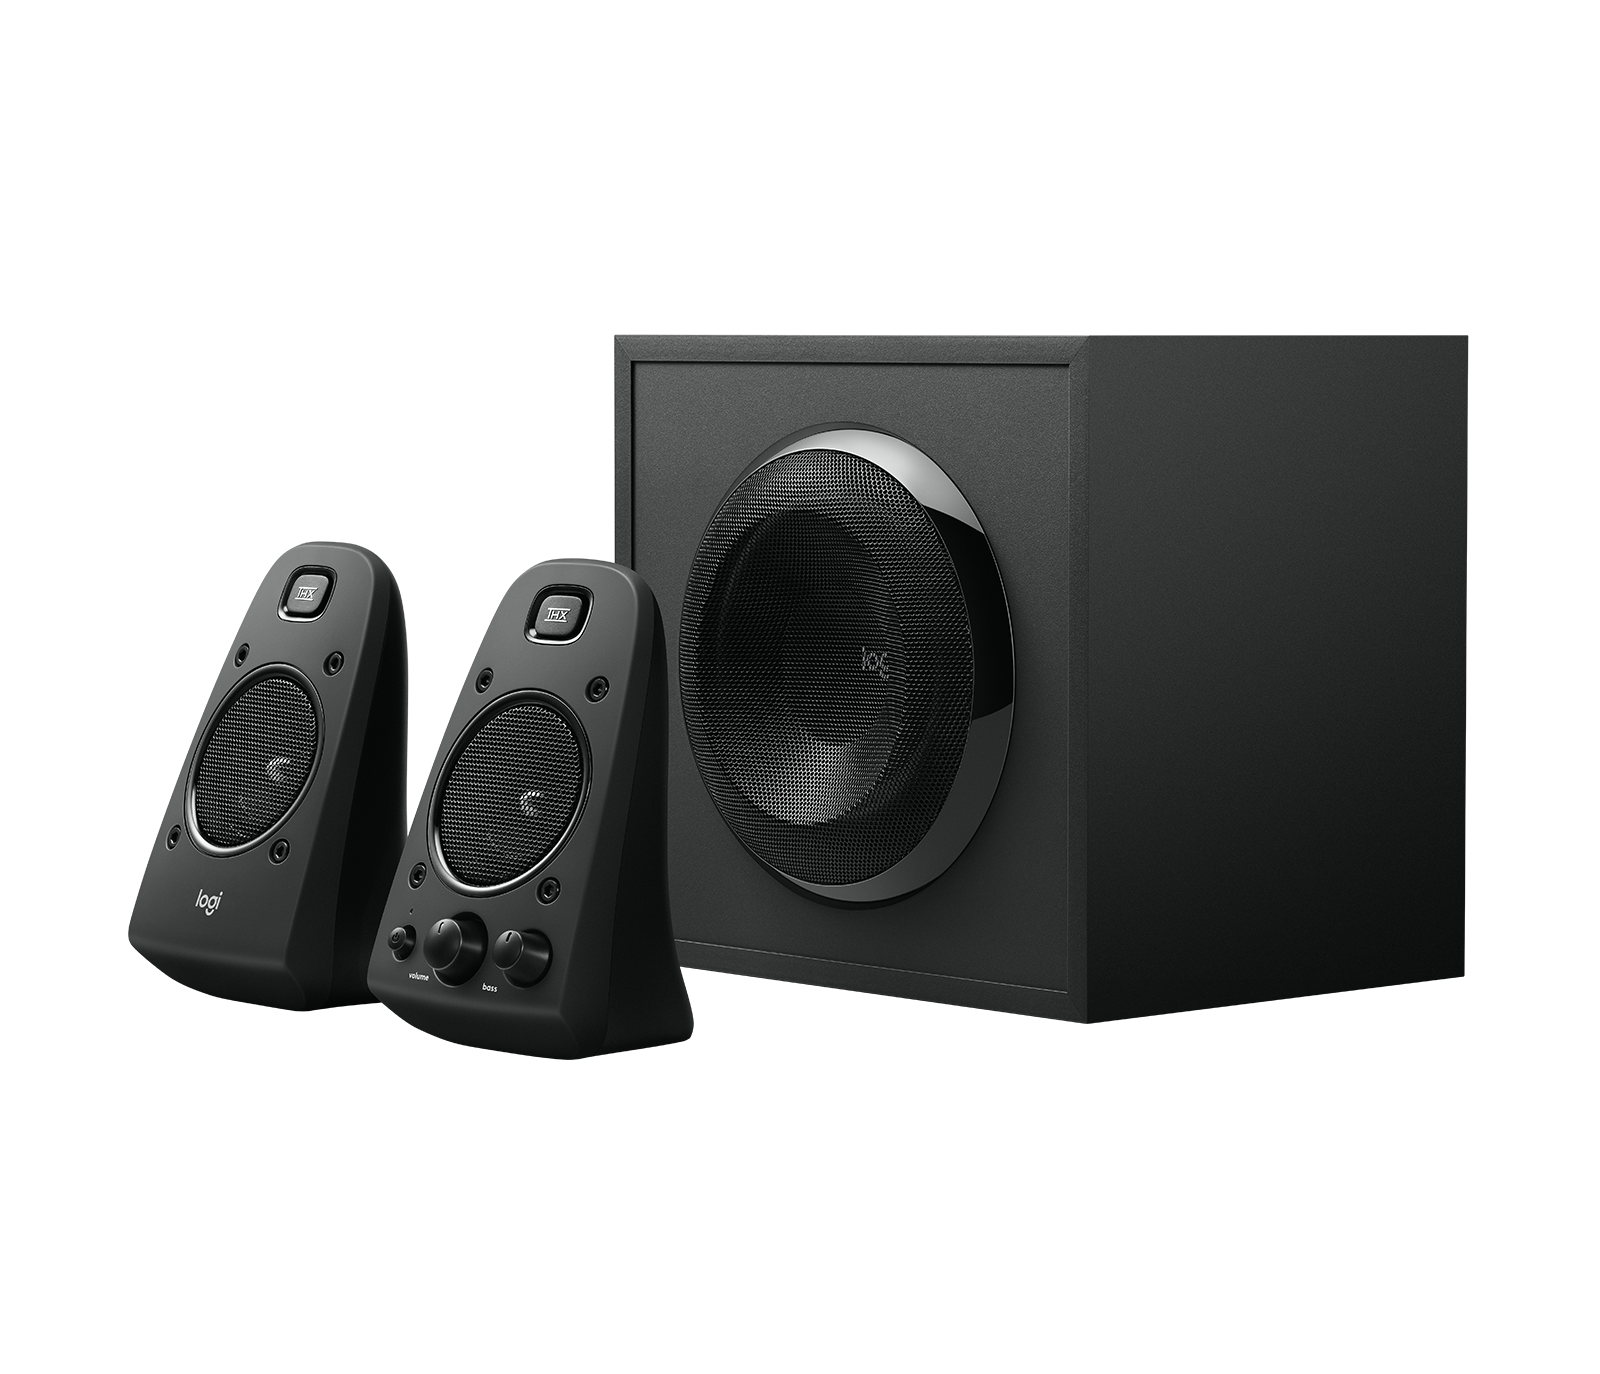 vlotter veelbelovend Aanbeveling Logitech Z623 2.1 Speaker System with THX Certified Audio